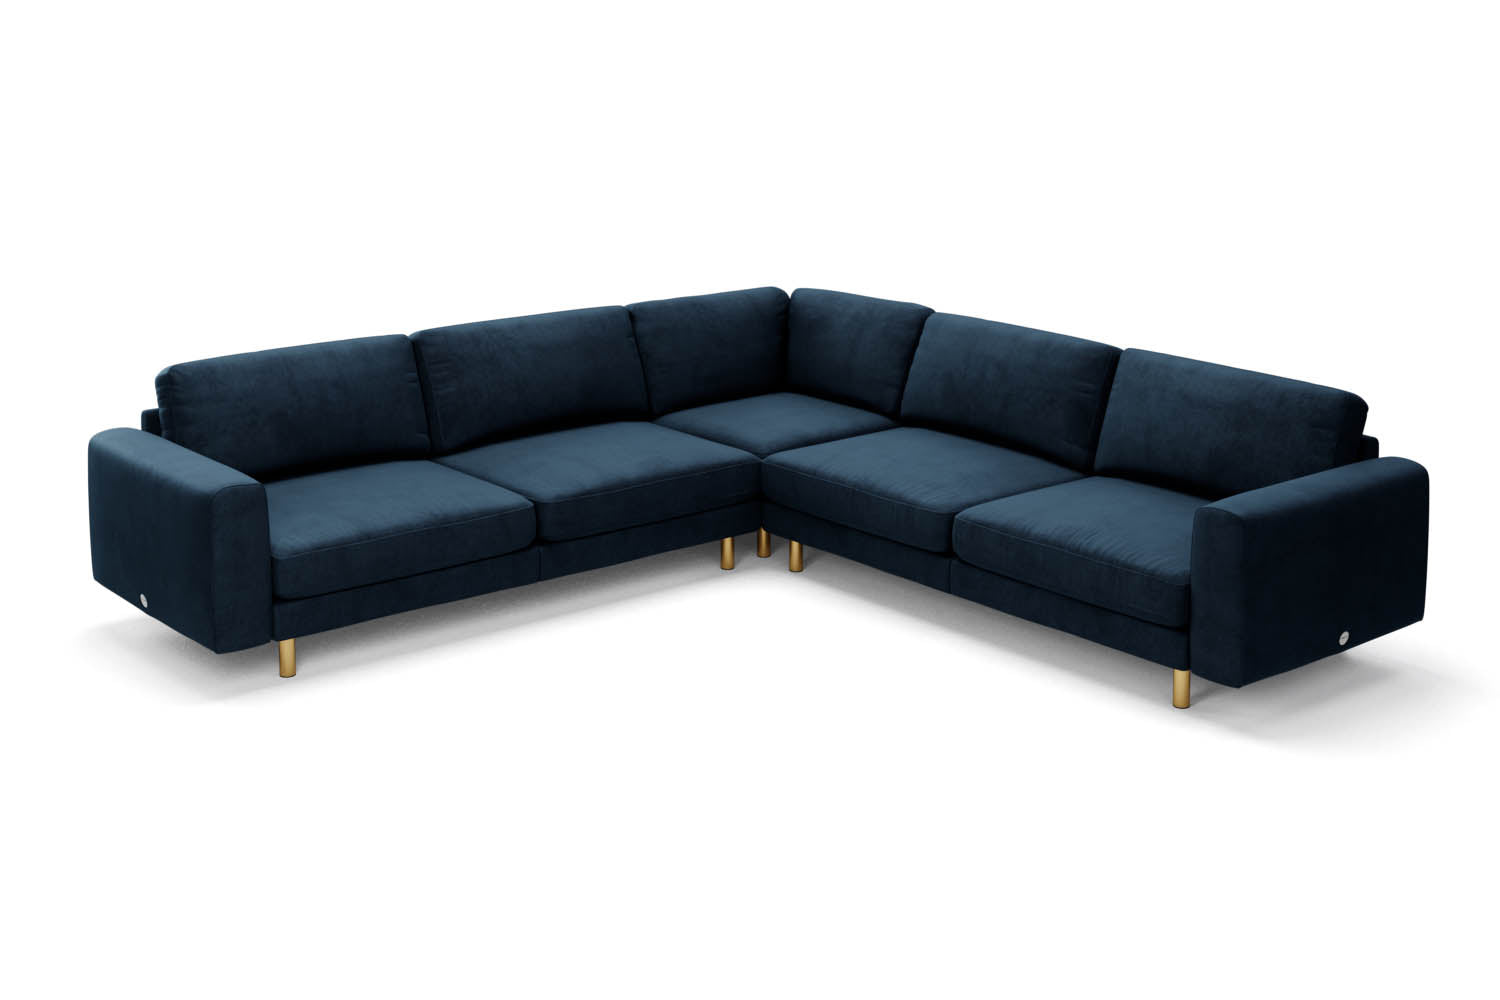 The Big Chill Large Corner Sofa